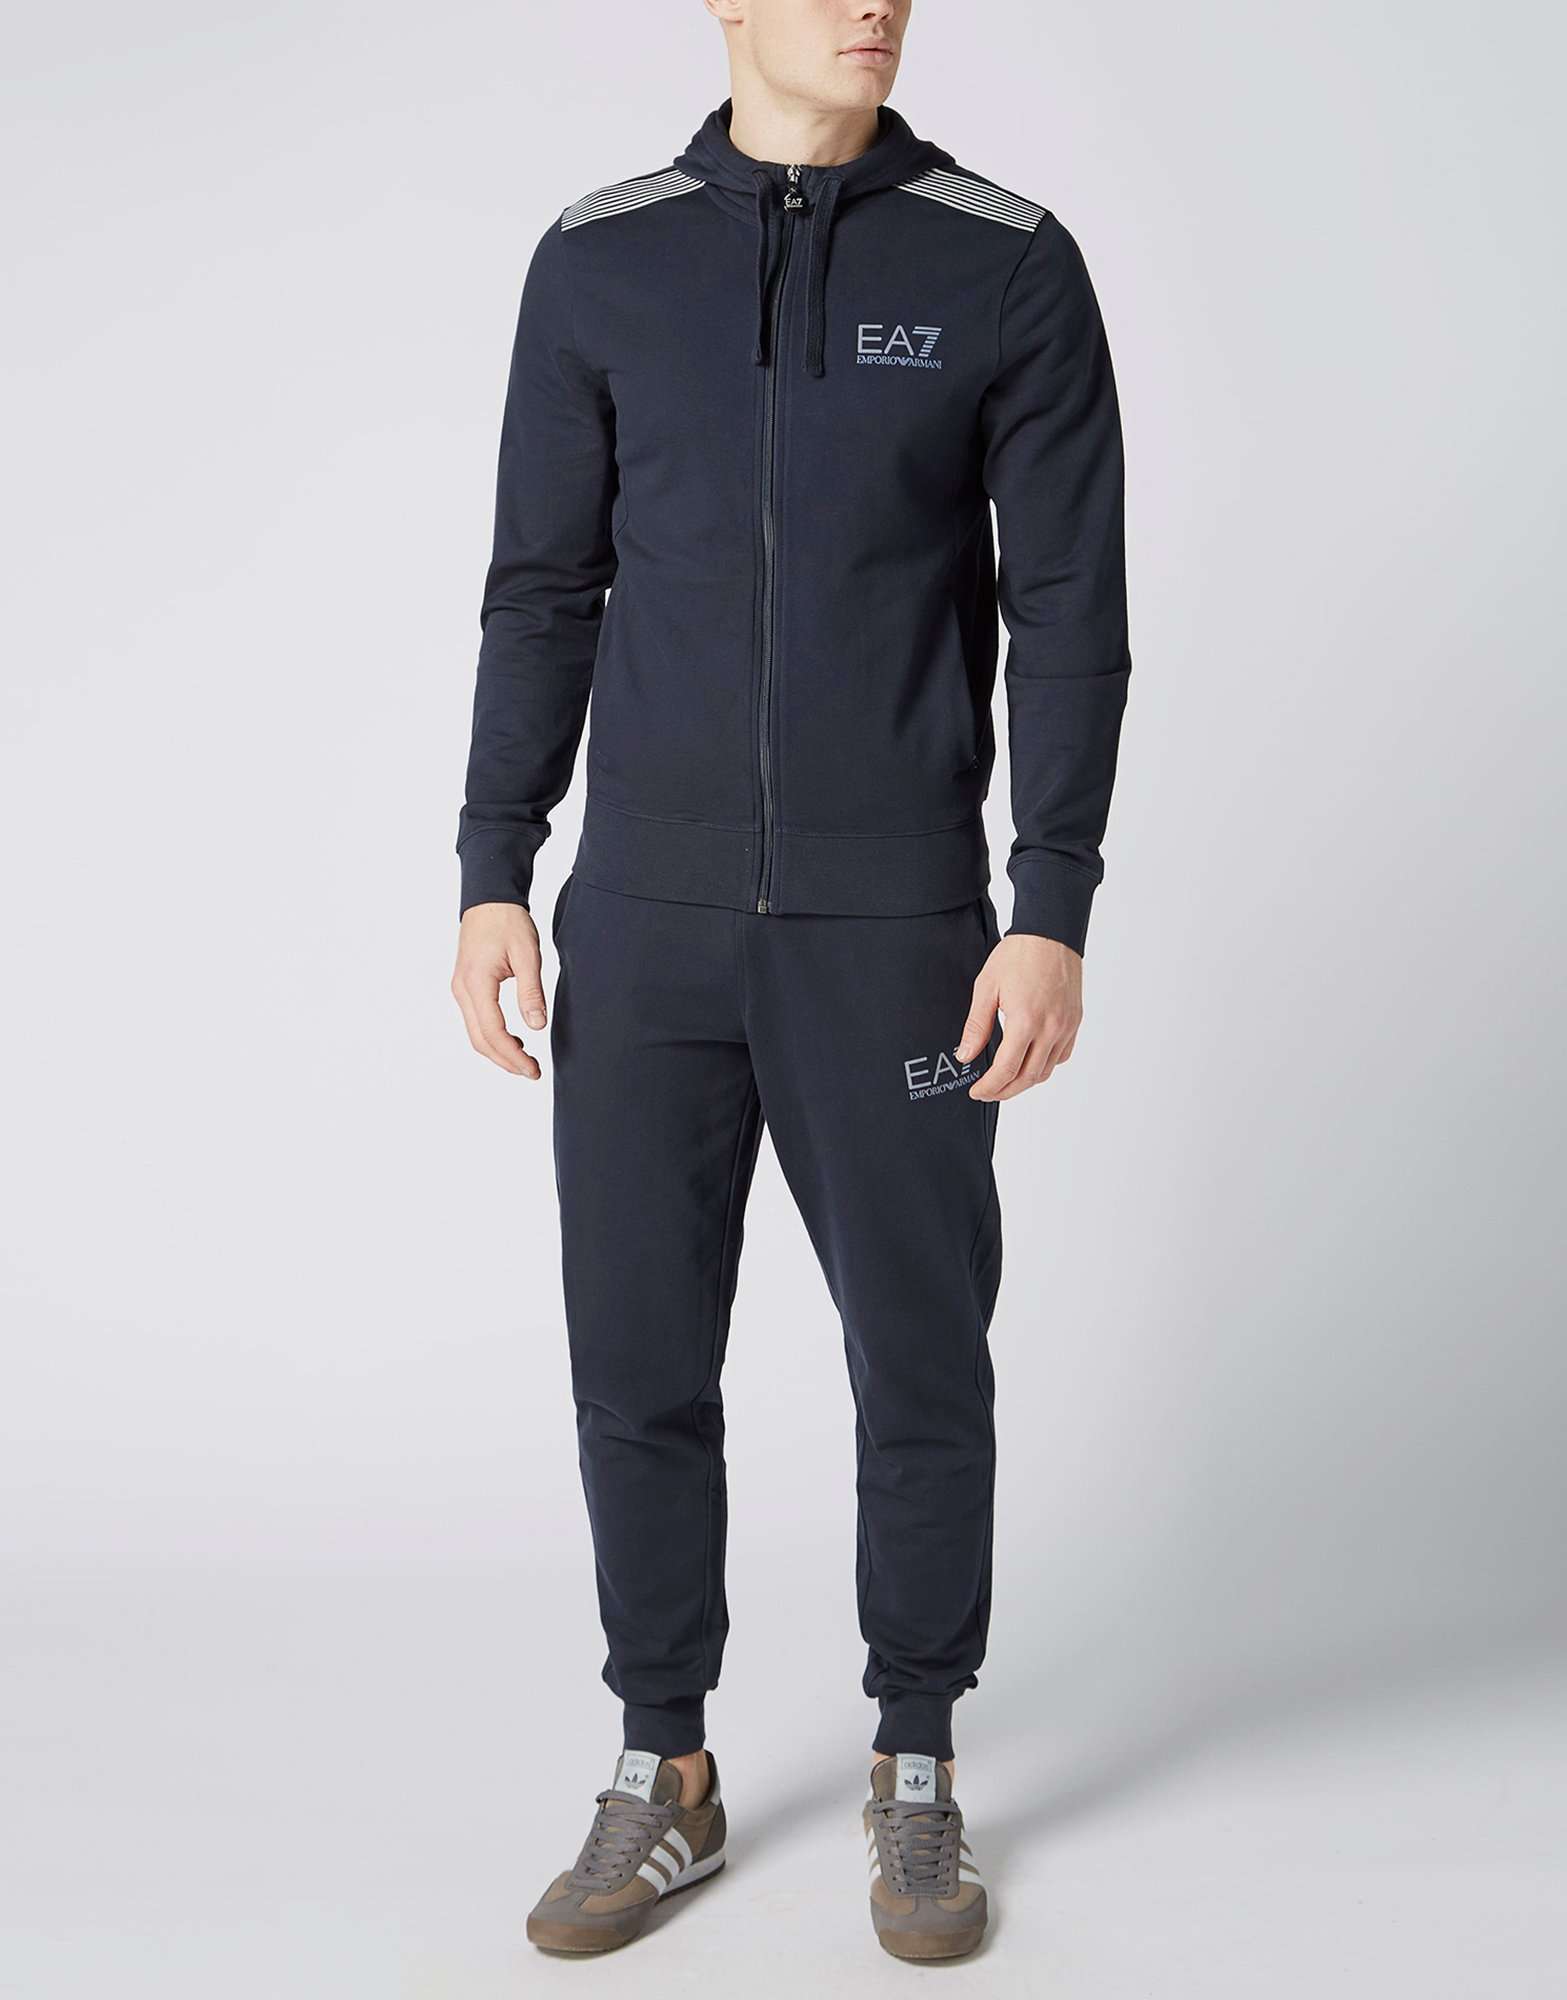 Emporio Armani EA7 Fleece Tracksuit - Exclusive | scotts Menswear